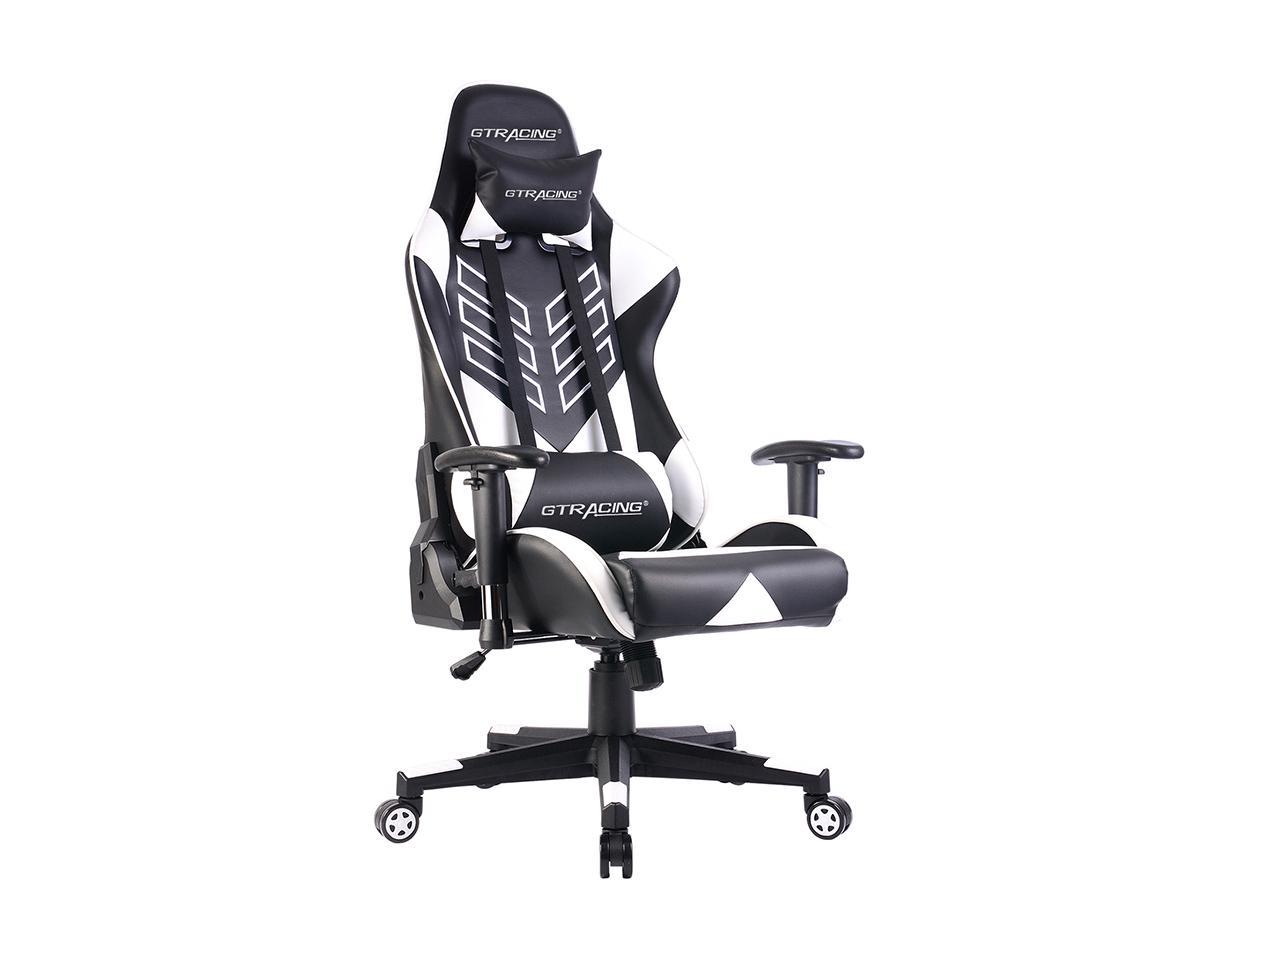 Gtracing Executive High Back Gaming Chair Computer Office Chair Pu Leather Swivel Chair Racing Chair Newegg Com